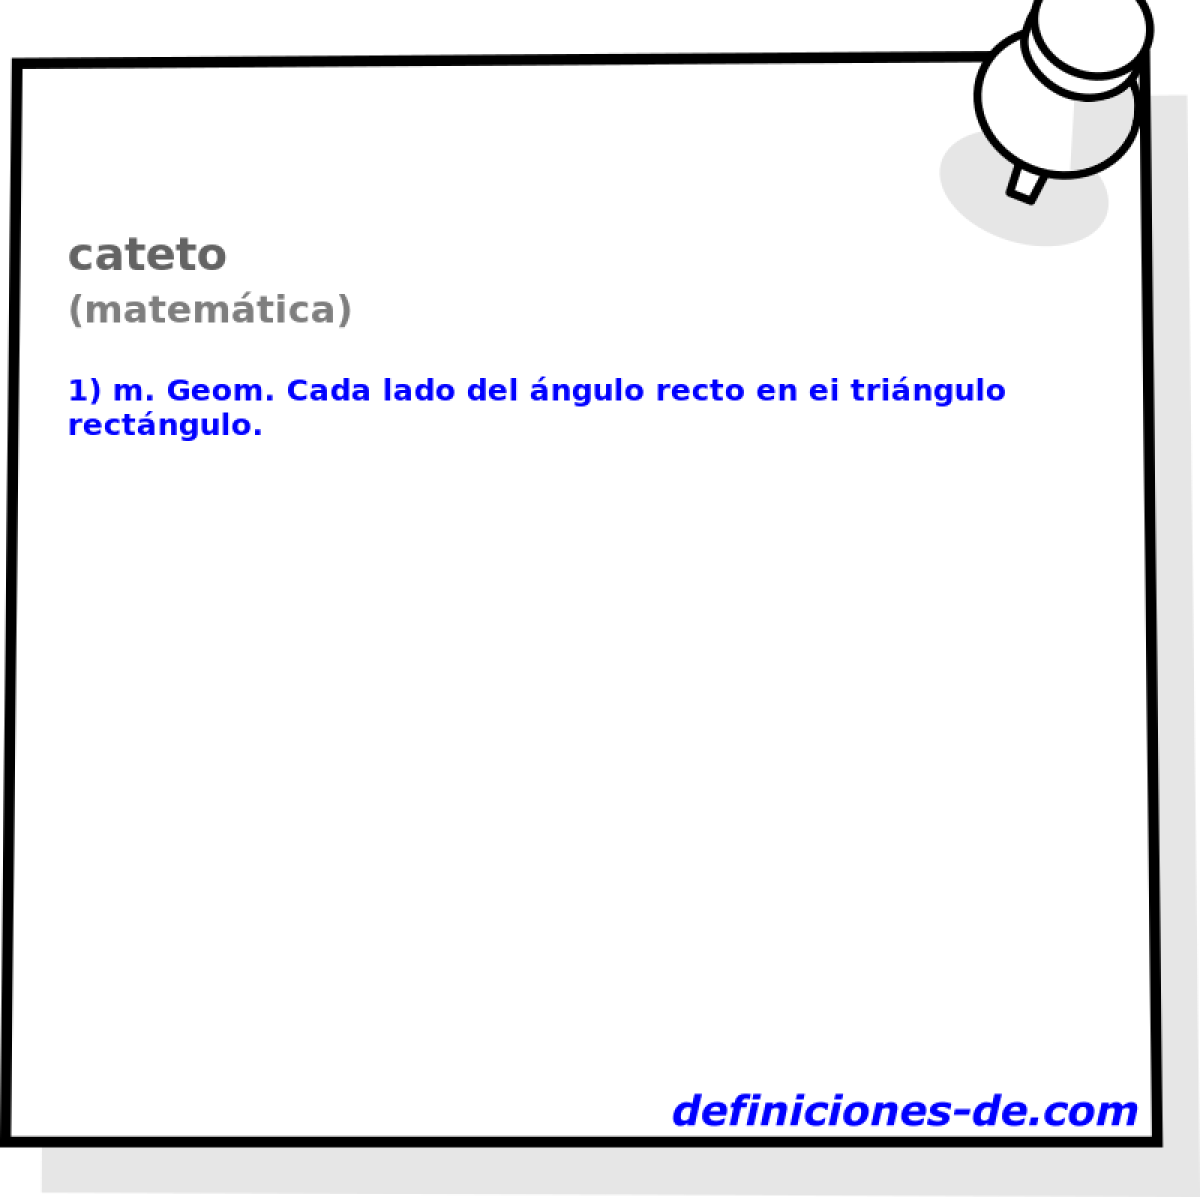 cateto (matemtica)